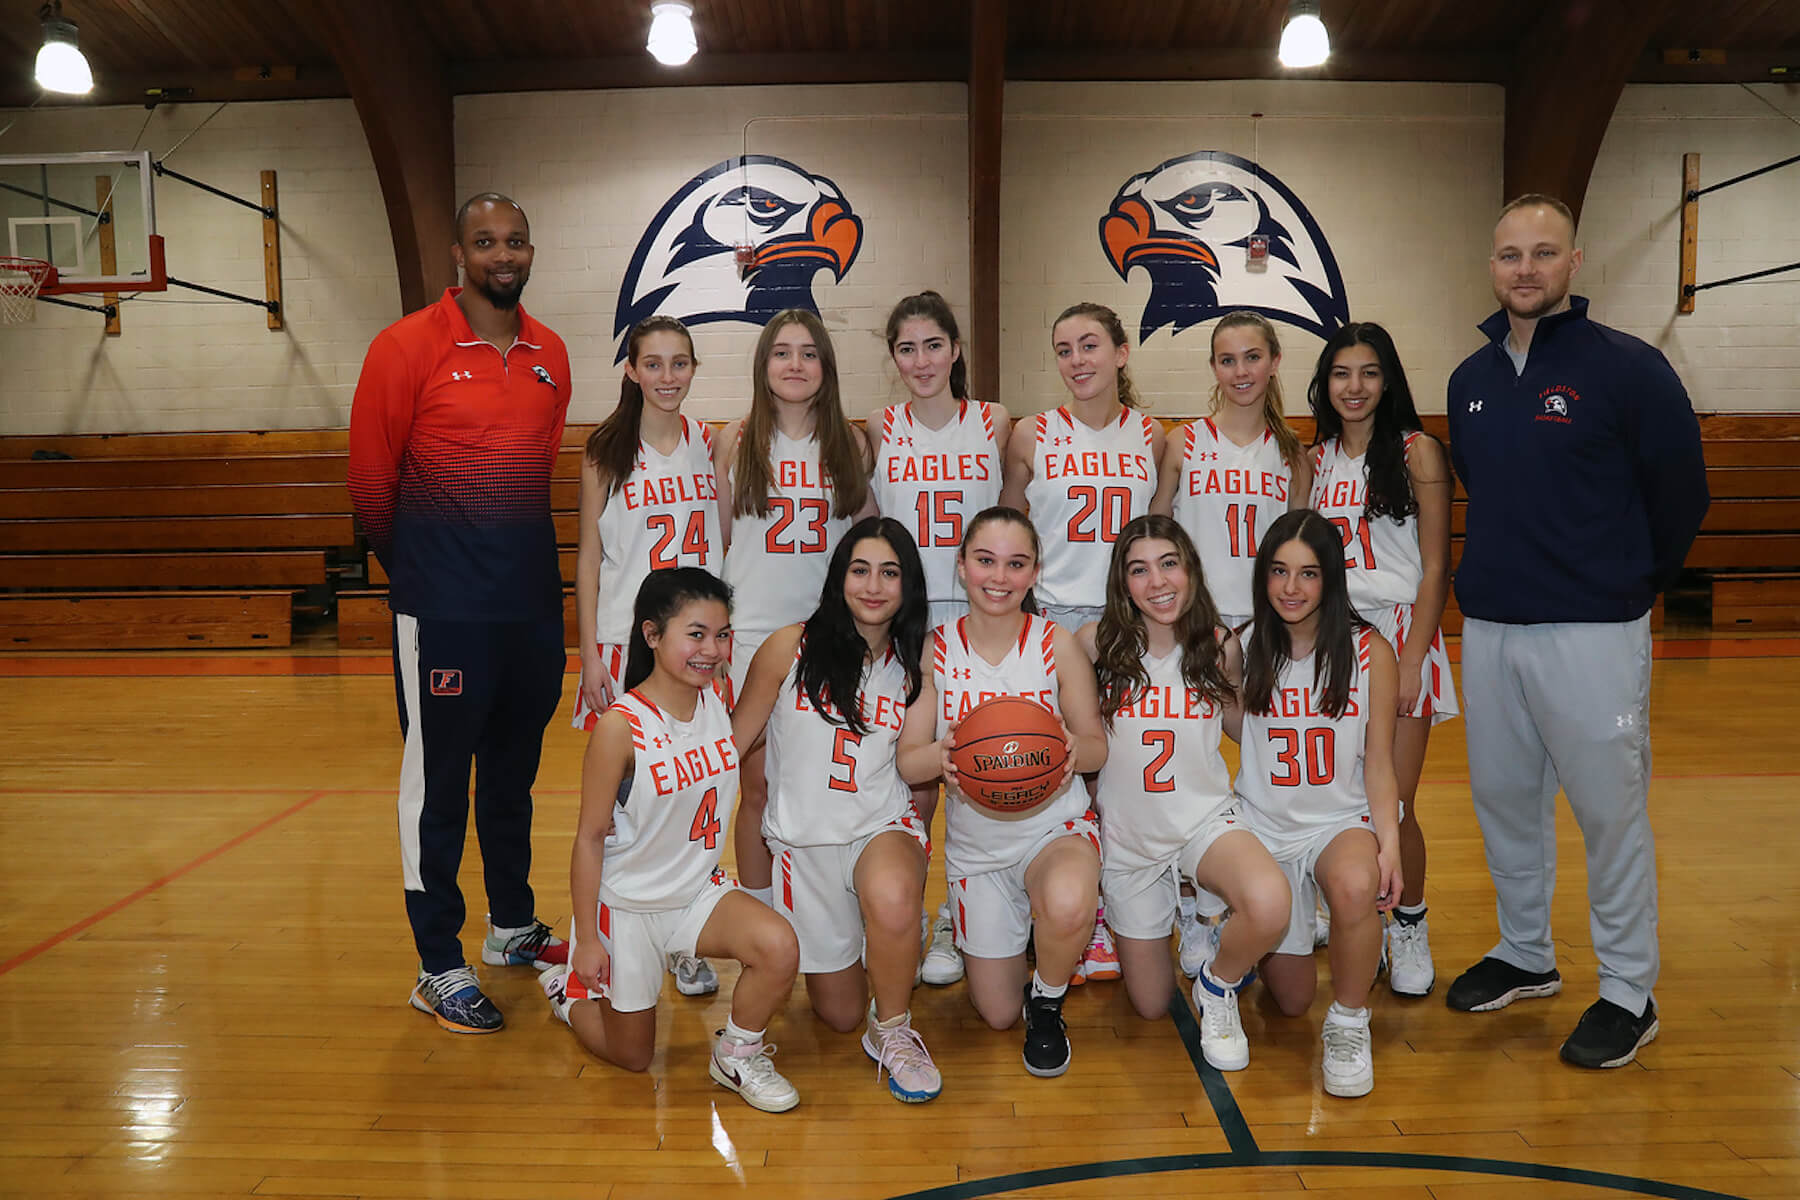 Fieldston Upper girls JV basketball team poses for group photo in gymnasium.